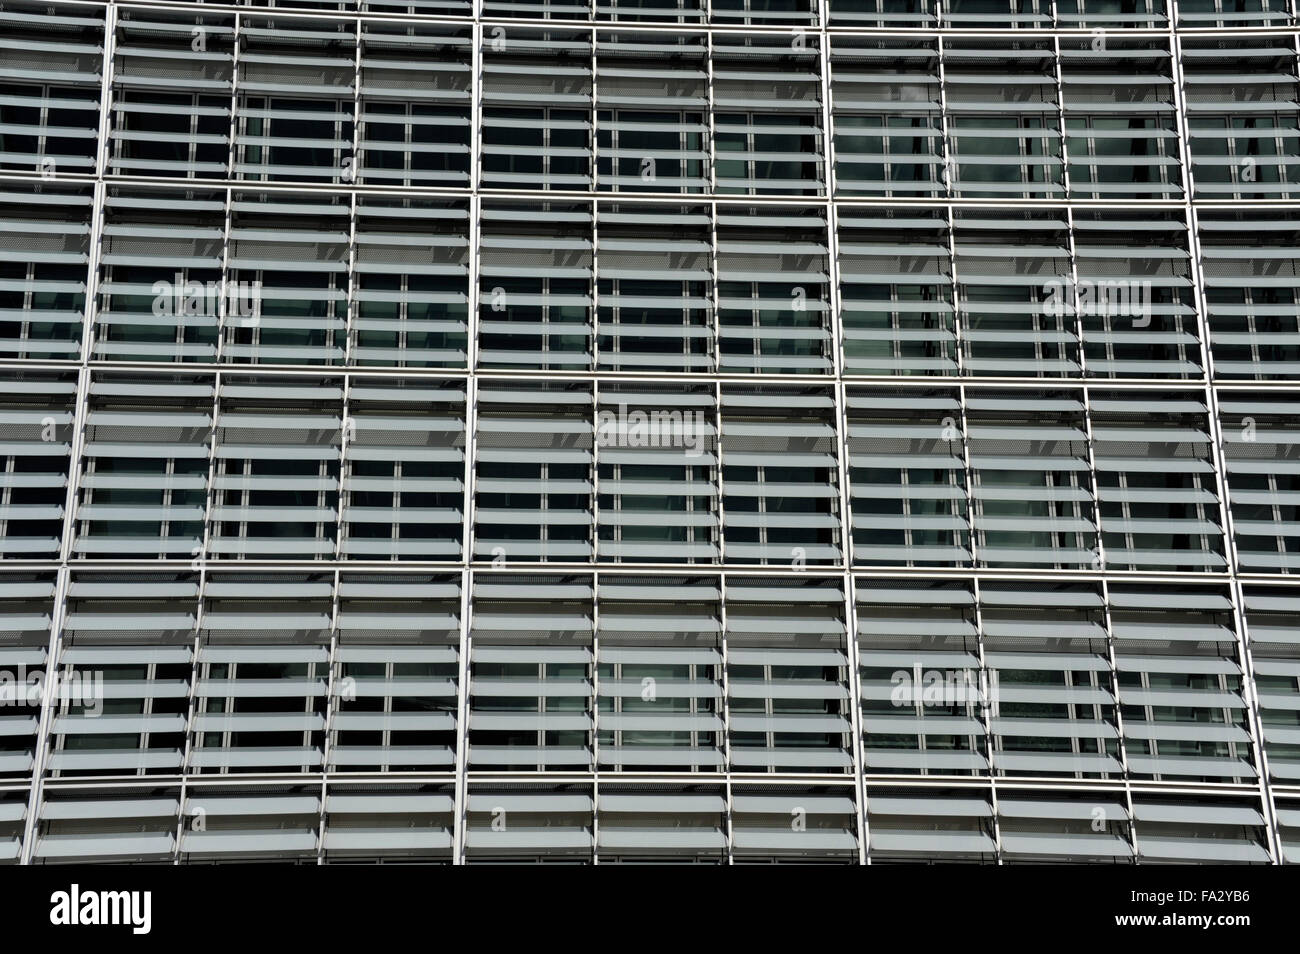 European commission,Berlaymont building,Brussels,Belgium,Lucien De Vattell architect Stock Photo